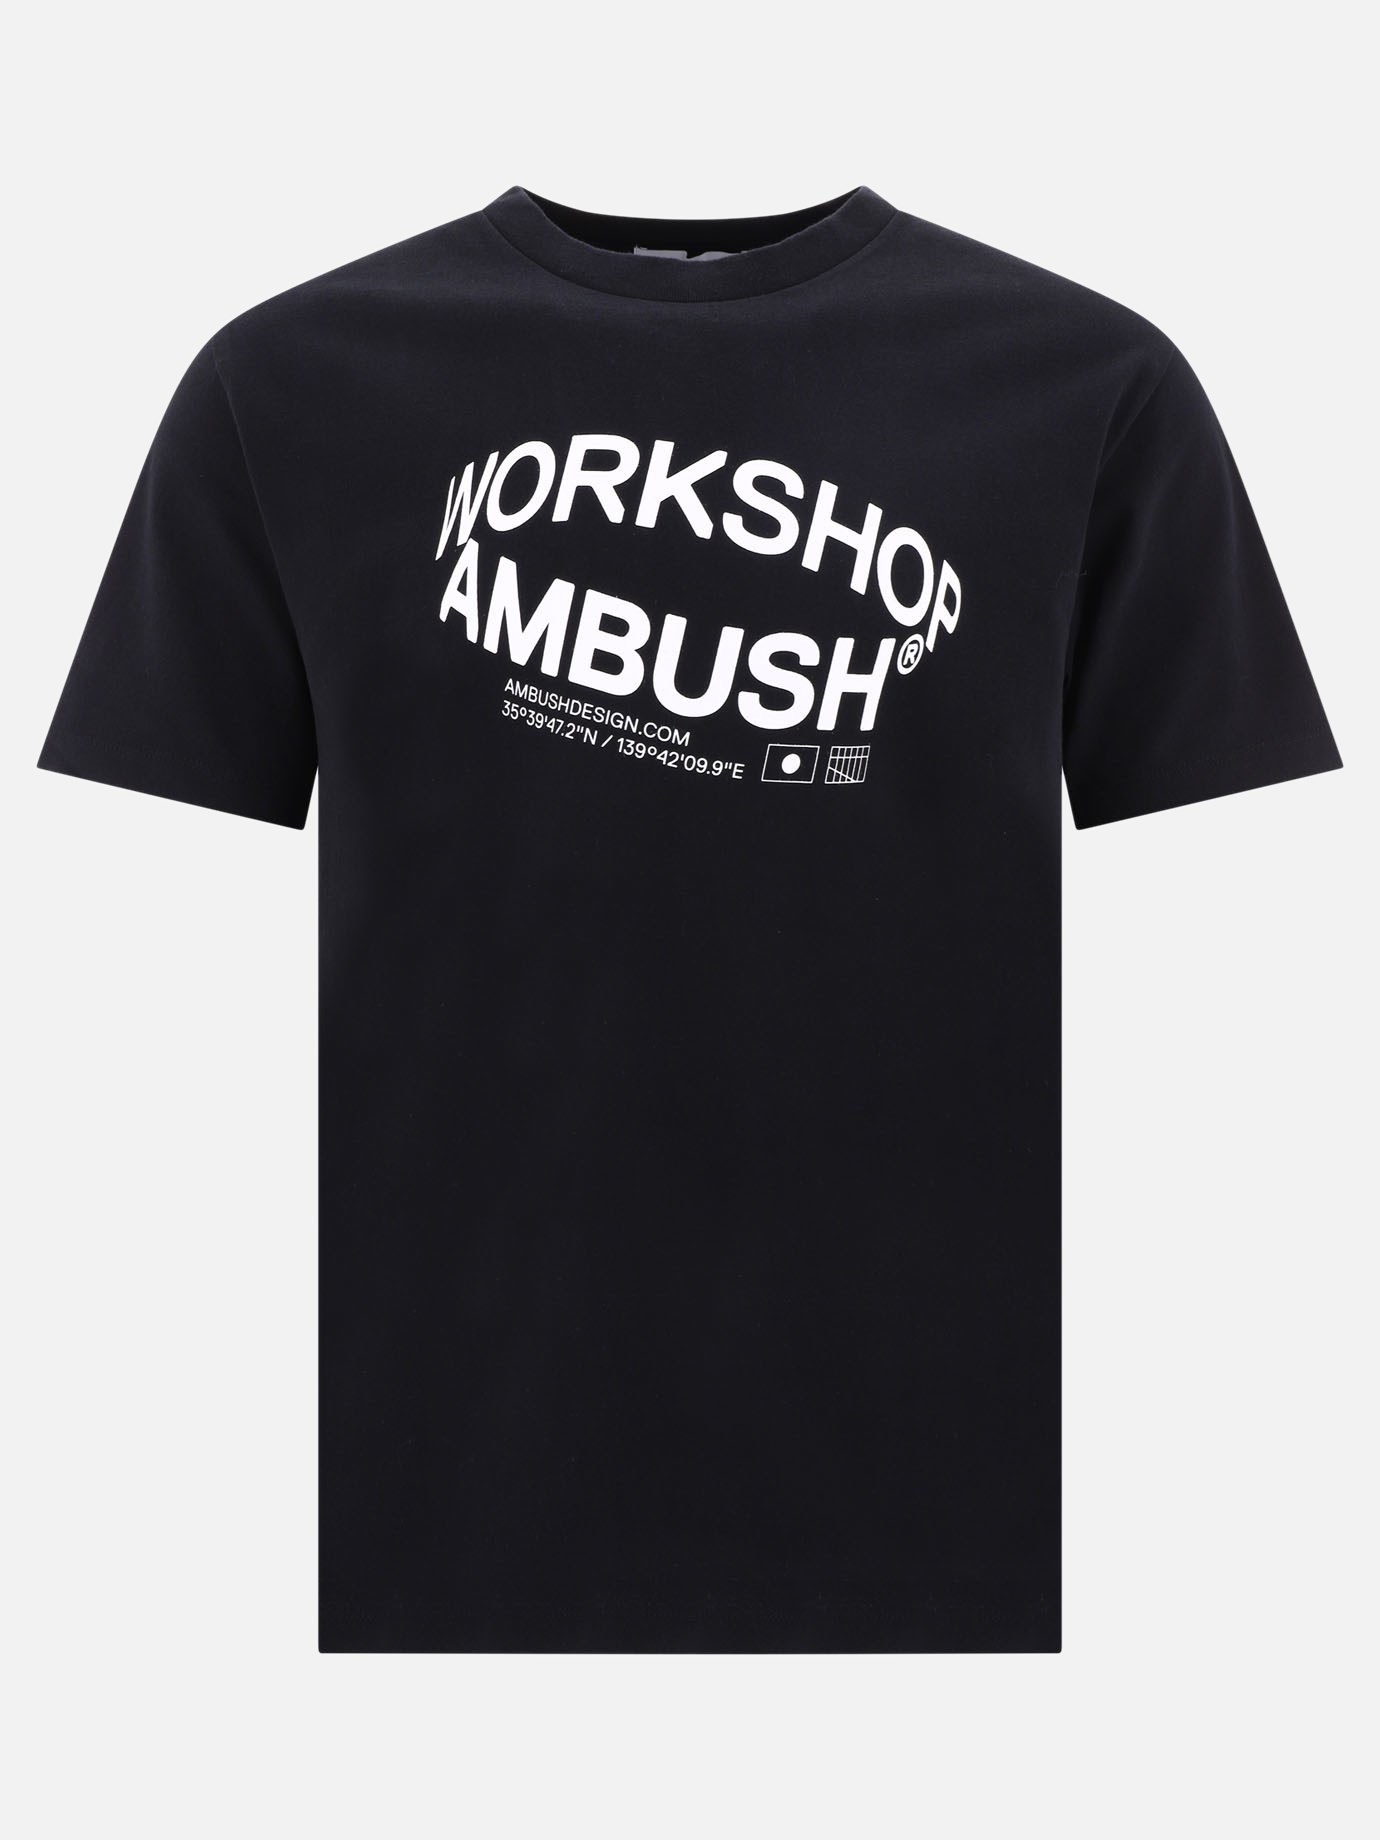  Revolve  t-shirtby Ambush - 4